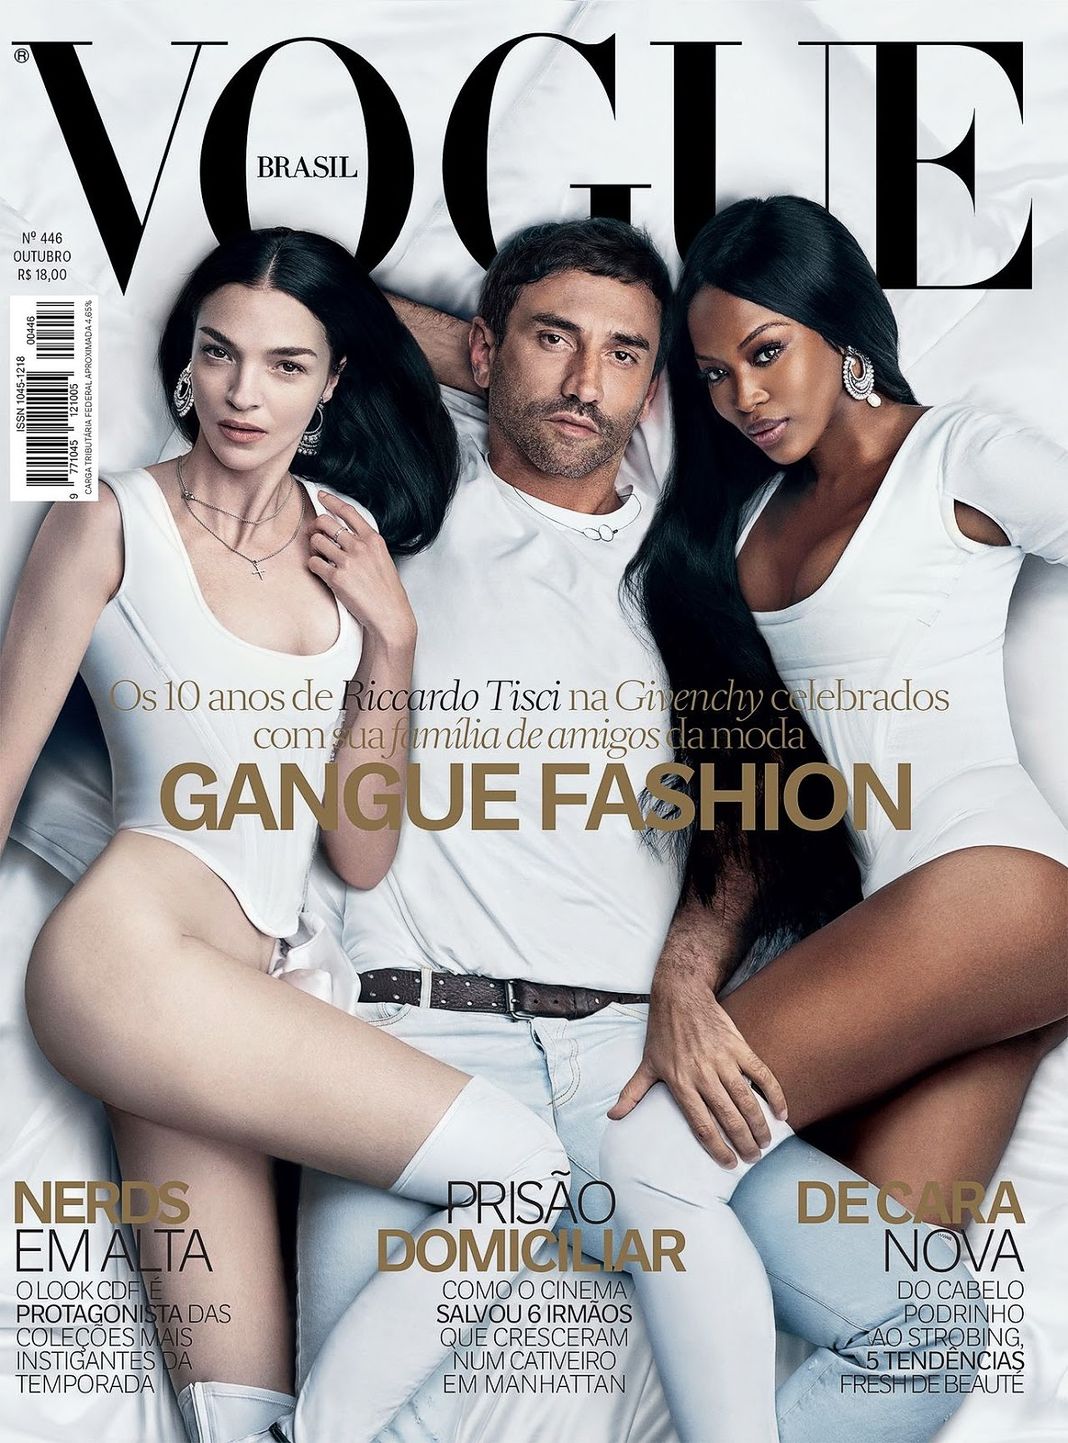 На обложке журнала Vogue Brasil, фотография Луиджи Мурену и Янго Хензи.